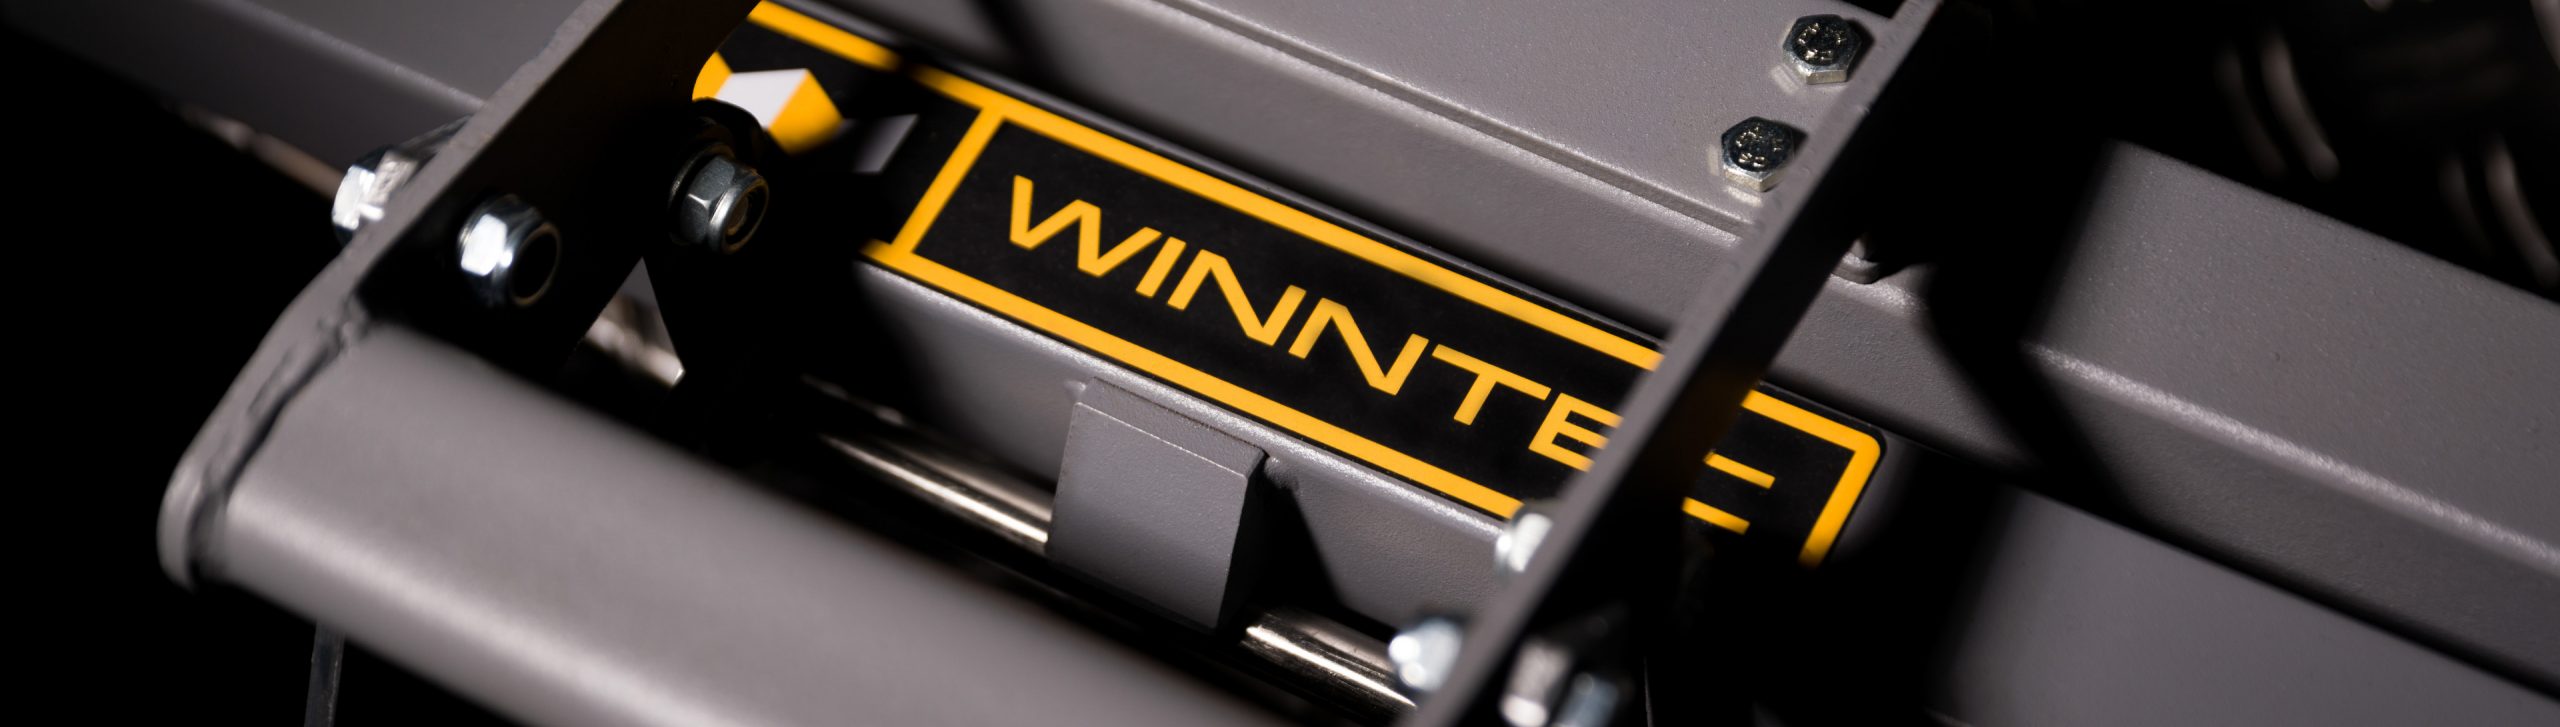 winntec.co.uk